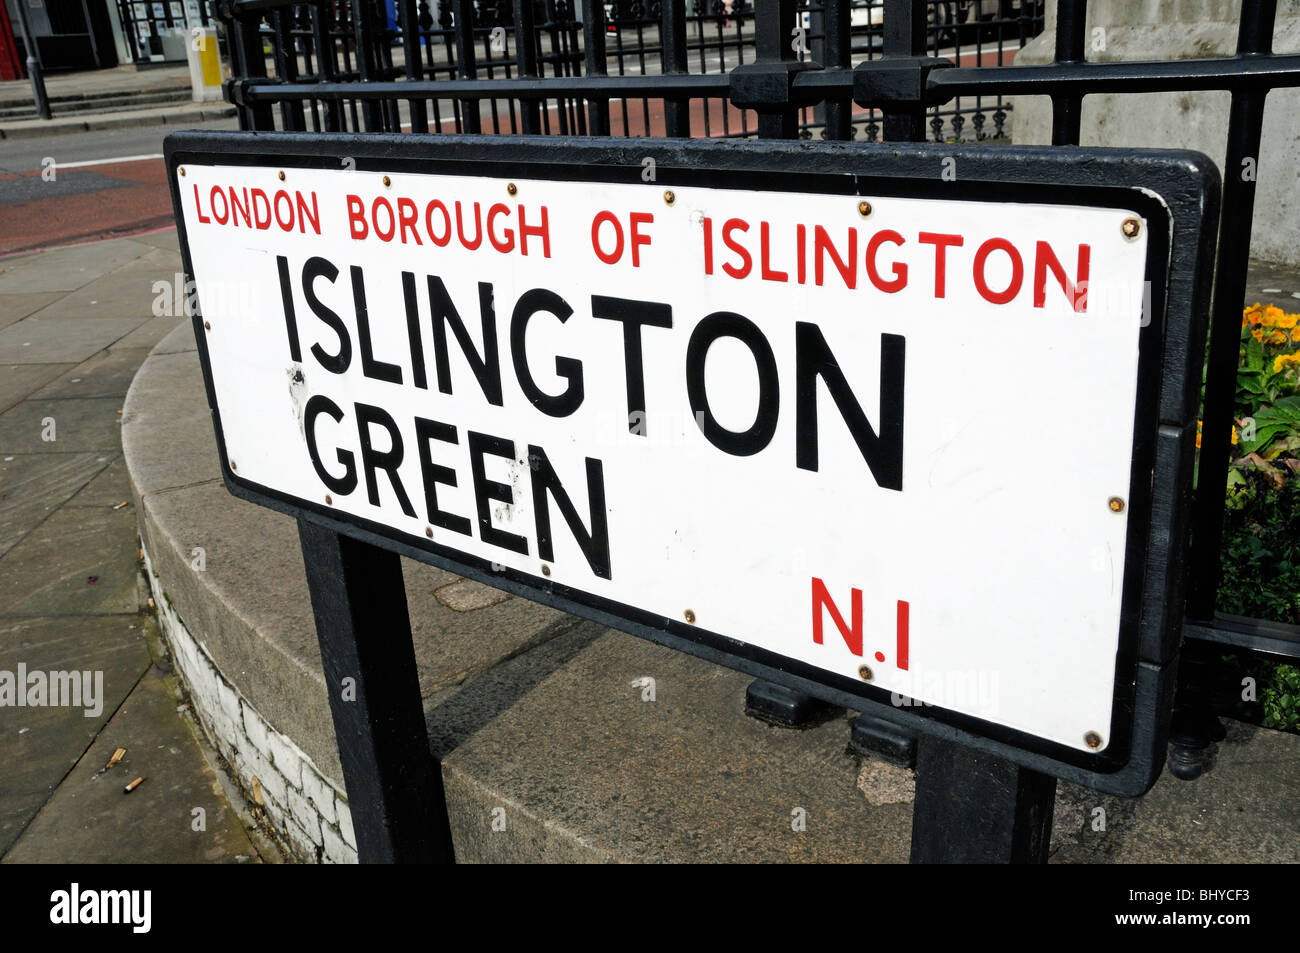 Islington Green N1, London Borough of Islington street sign, England UK Stock Photo